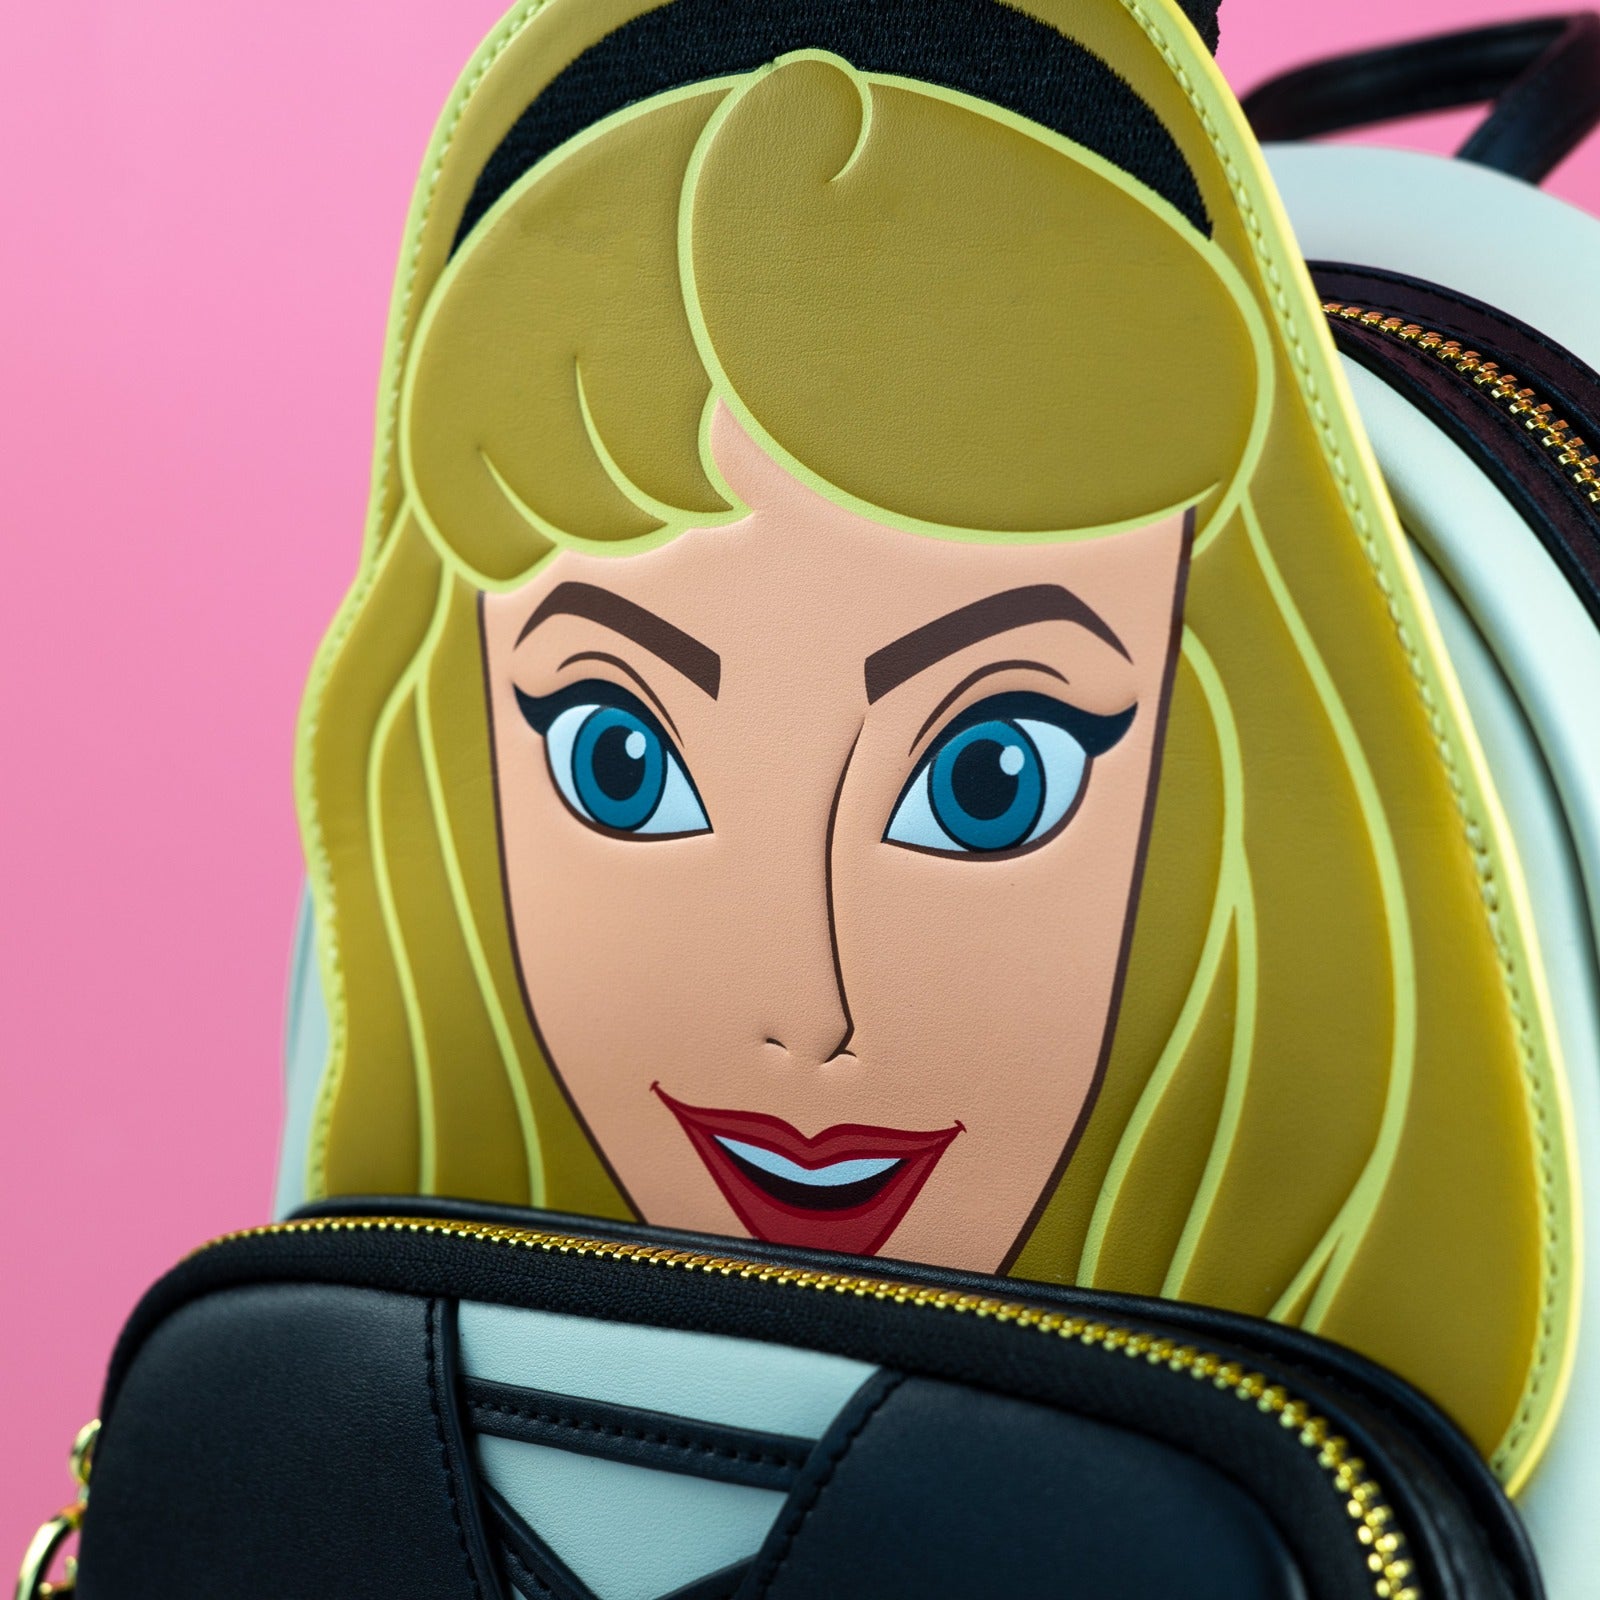 Loungefly x Disney Sleeping Beauty Princess Aurora as Briar Rose Cosplay Mini Backpack